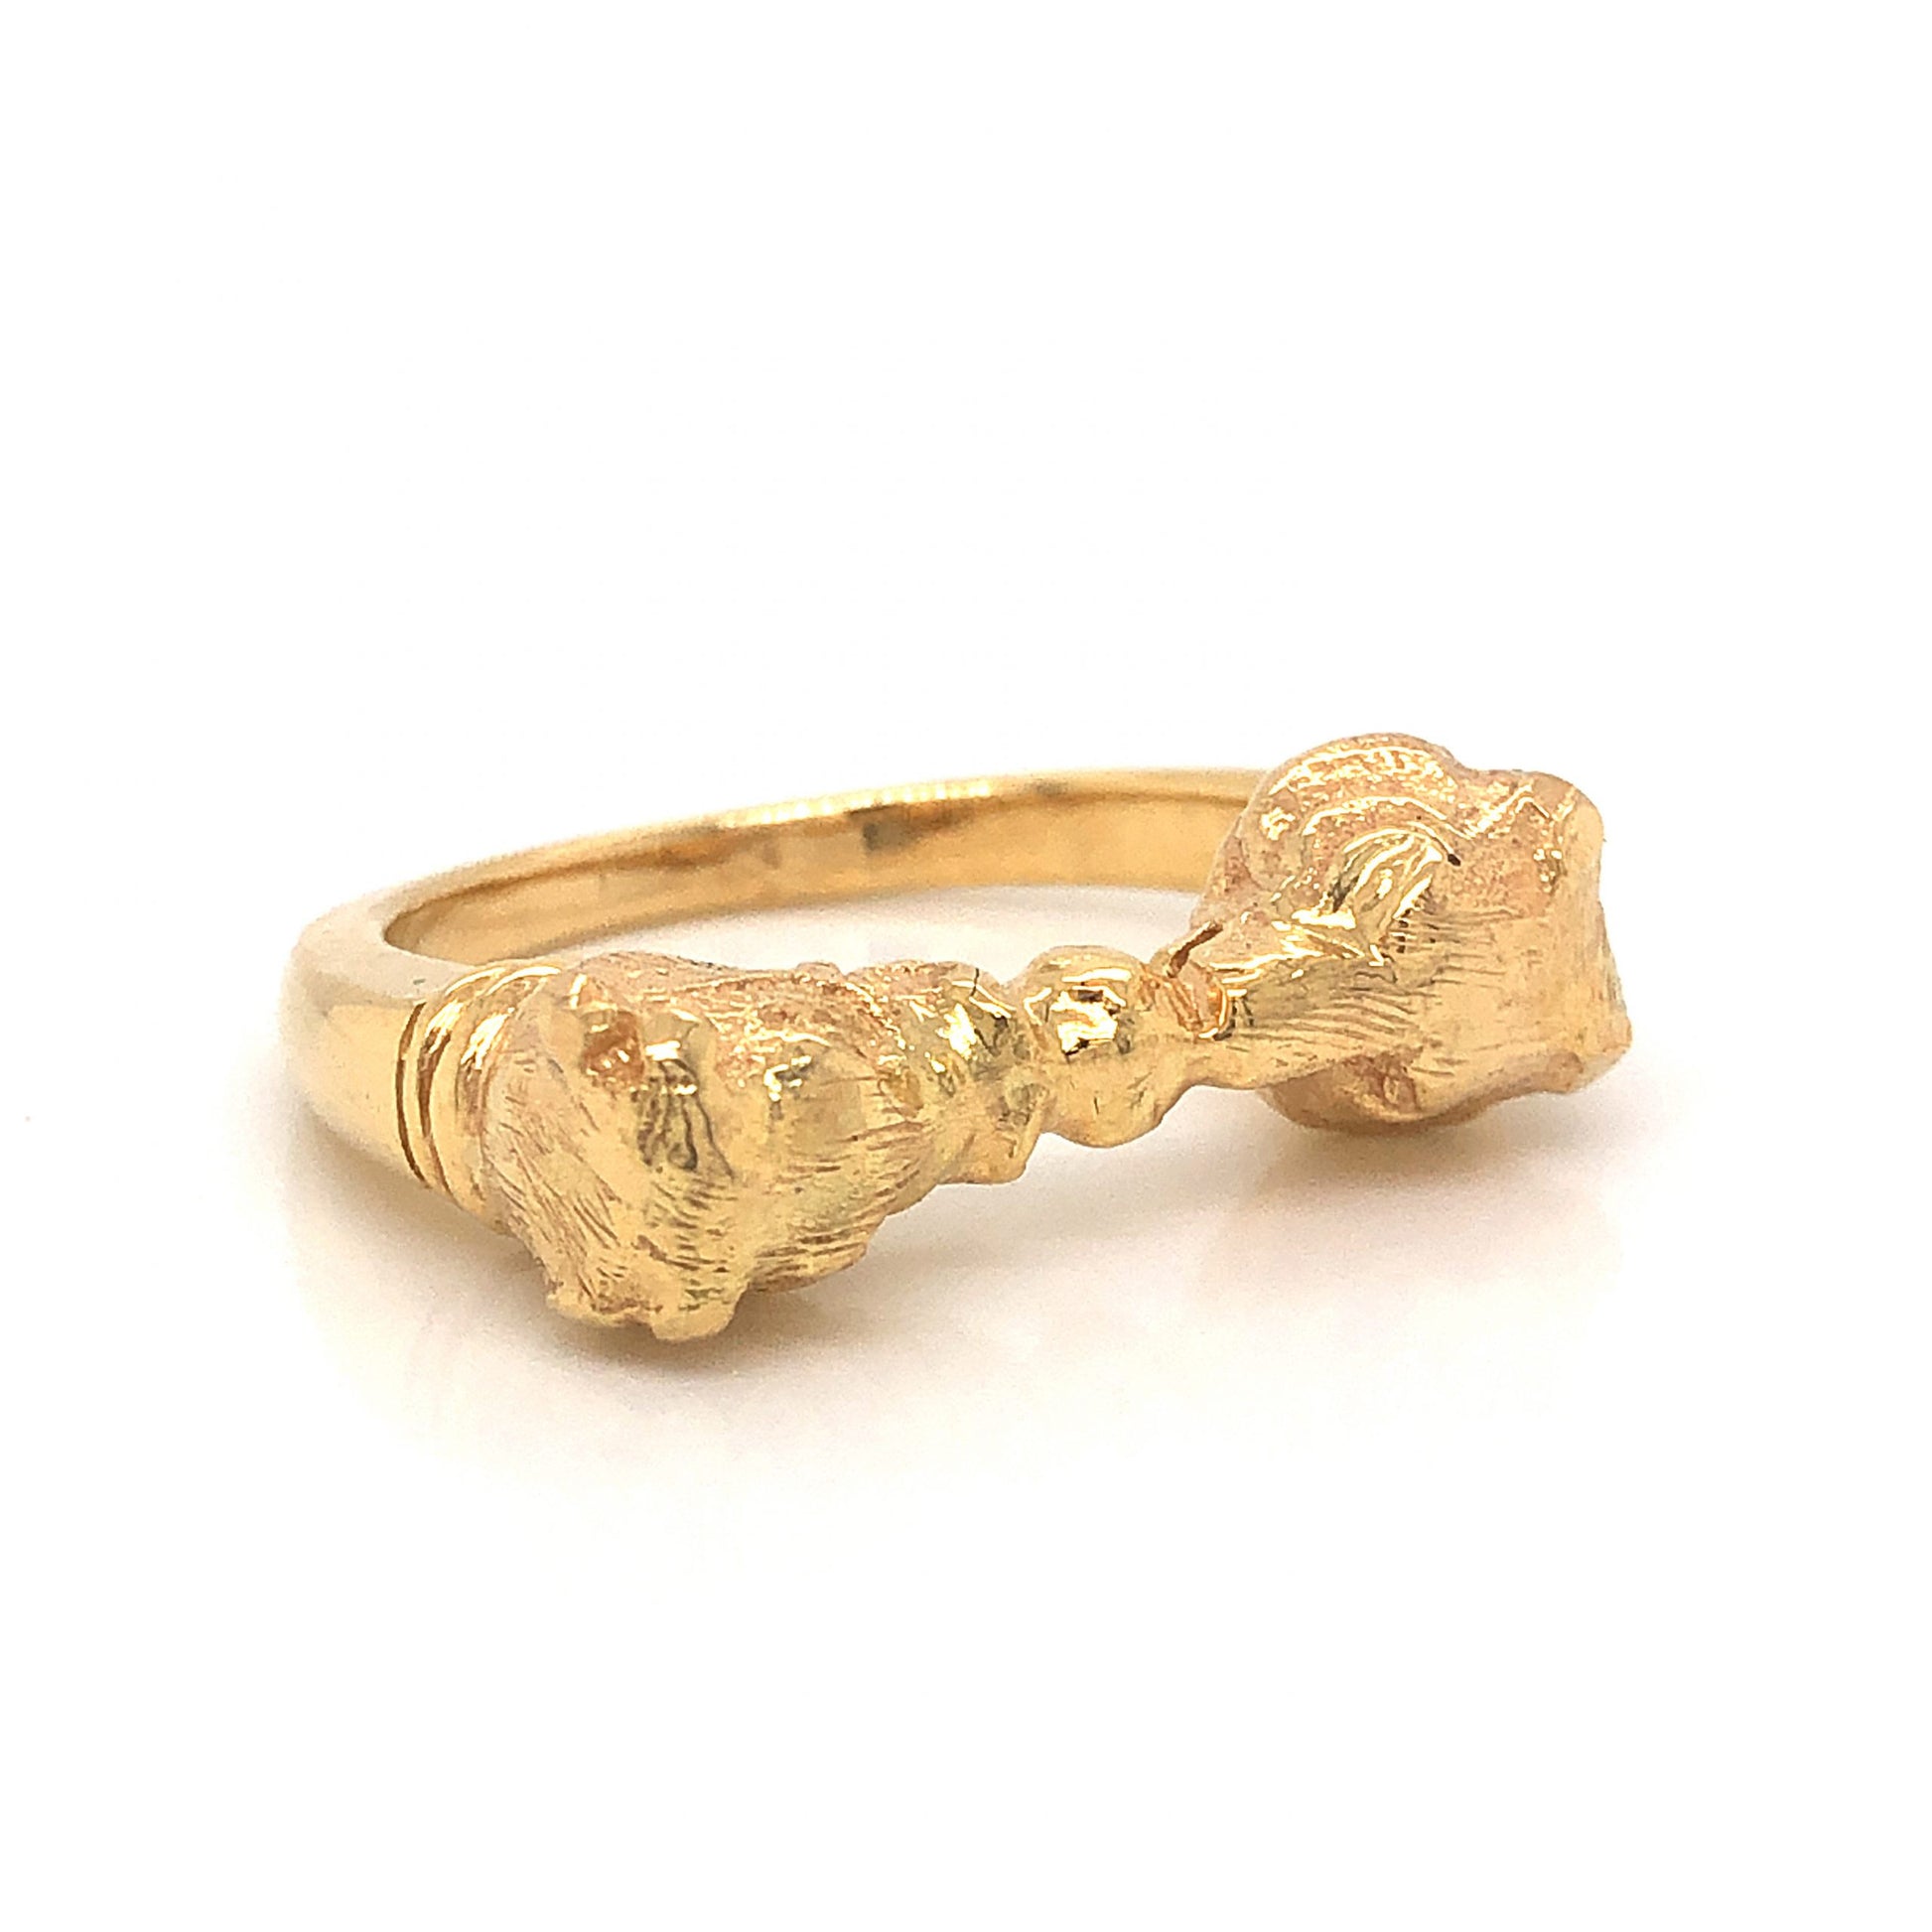 Bull & Bear Stock Market Ring in 18k Yellow GoldComposition: 18 Karat Yellow Gold Ring Size: 8.75 Total Gram Weight: 8.9 g